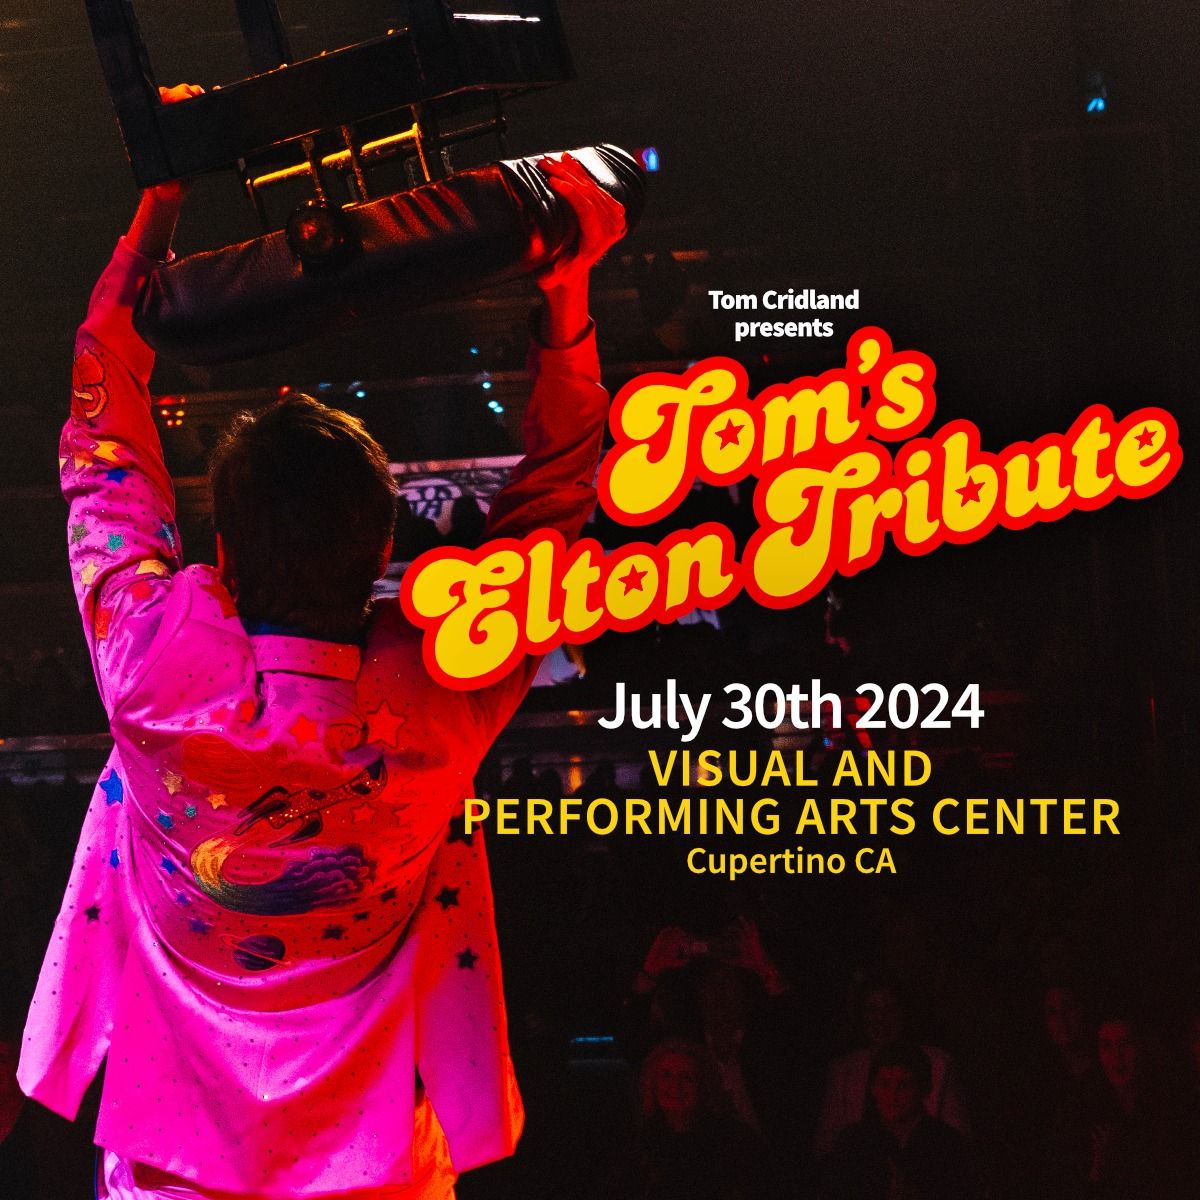 Tom's Elton Tribute